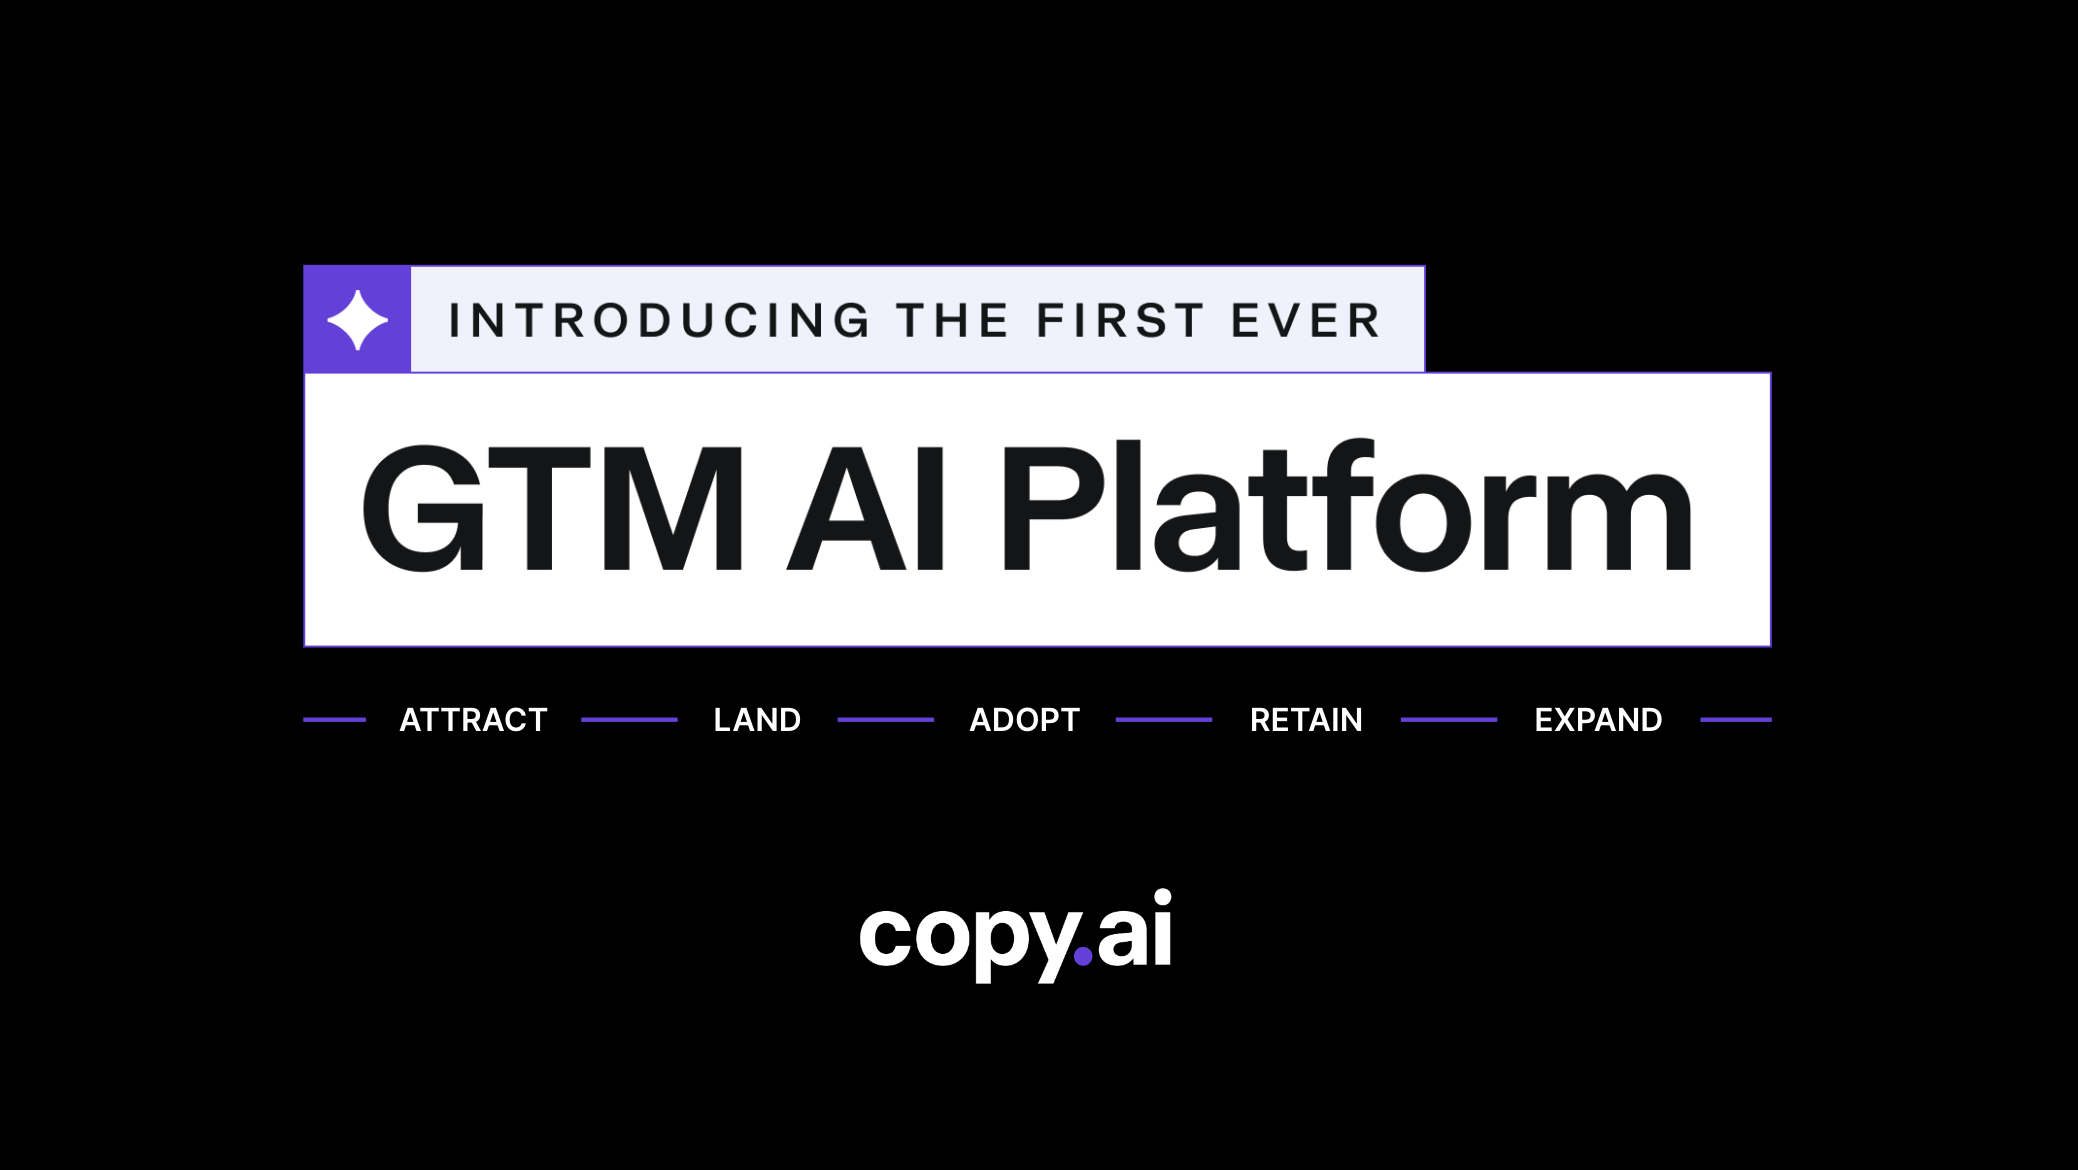 Copy.ai가 새롭게 출시한 GTM 자동화 플랫폼